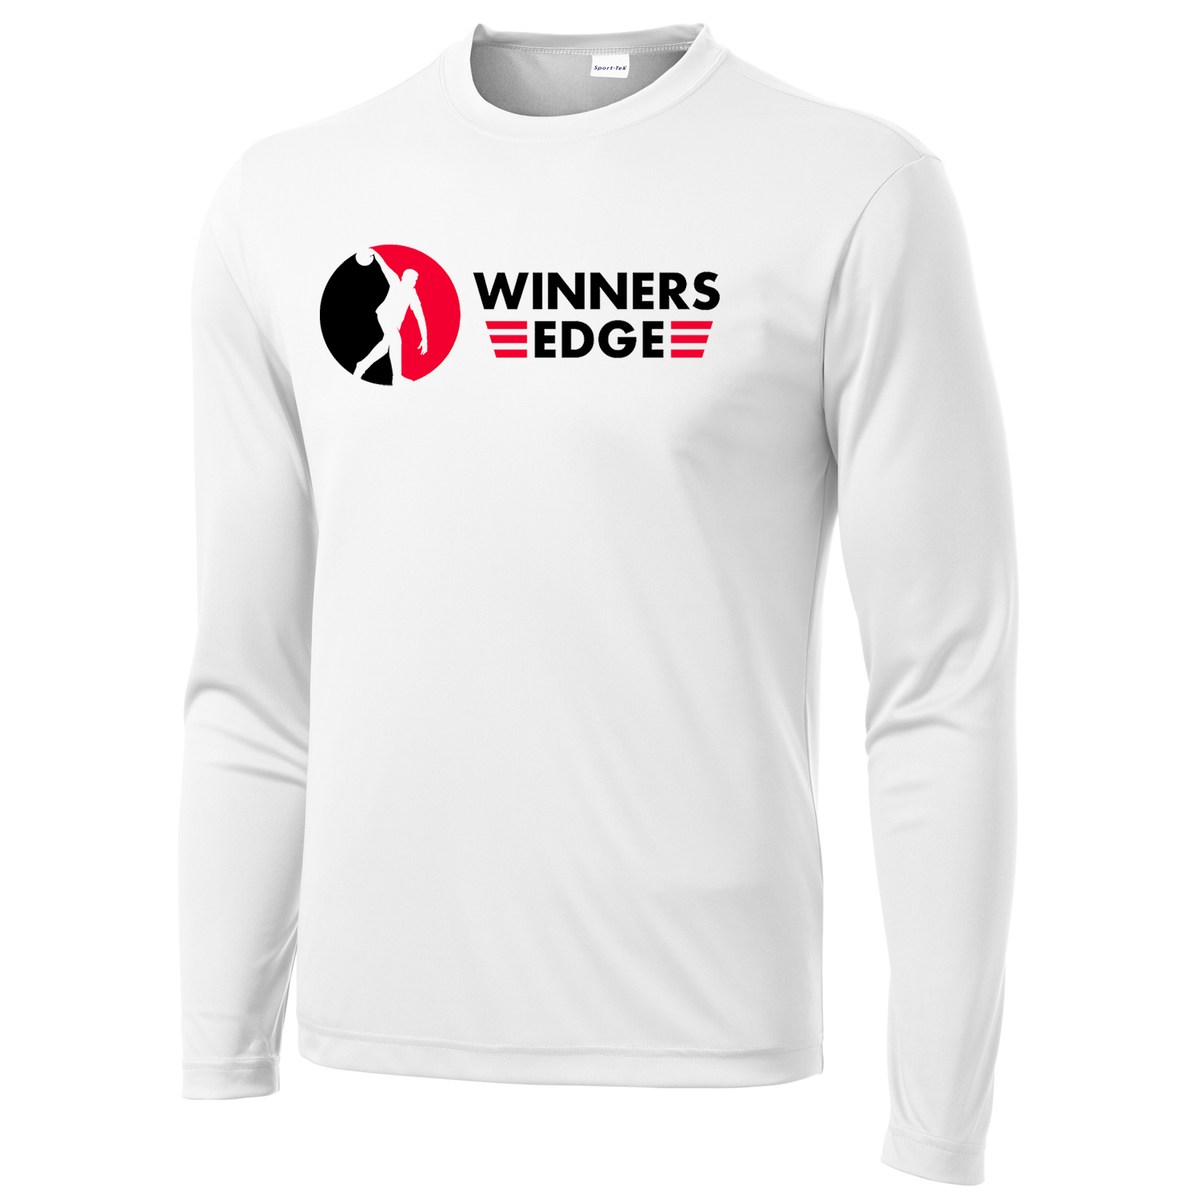 Winner's Edge Bowling Long Sleeve Performance Shirt